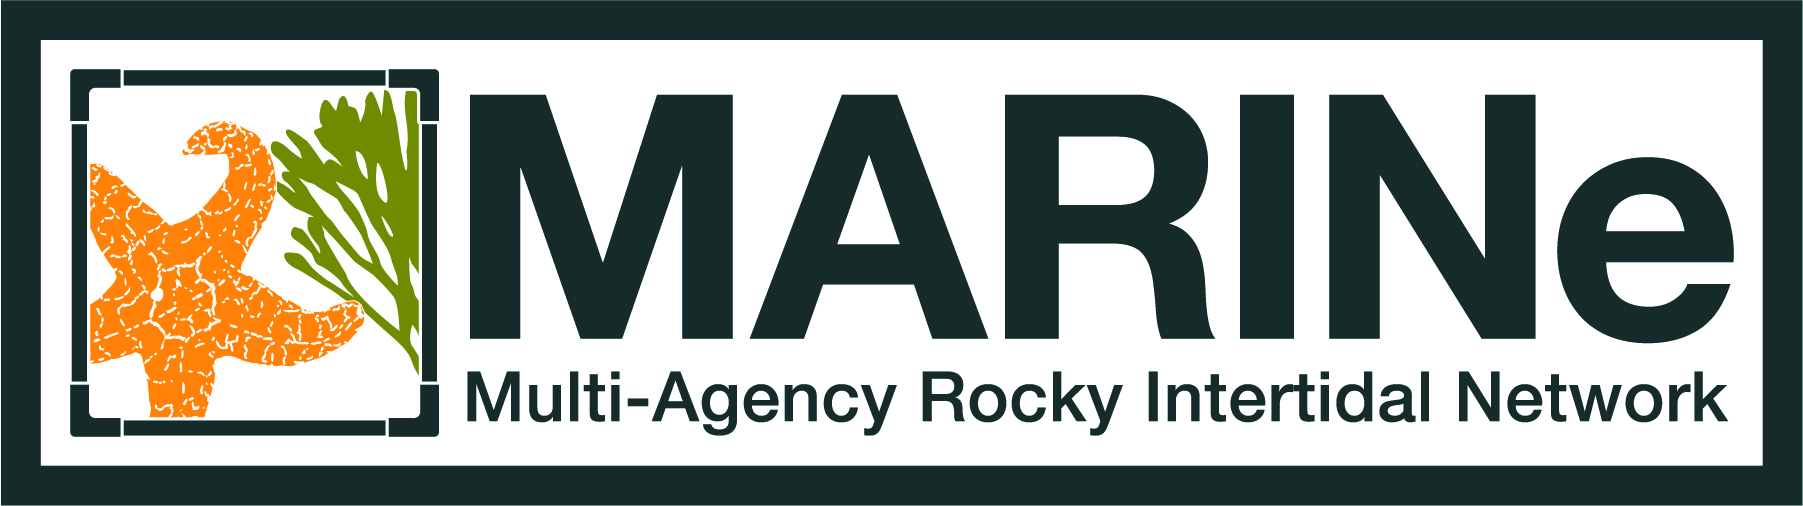 Multi-Agency Rocky Intertidal Network (MARINe)